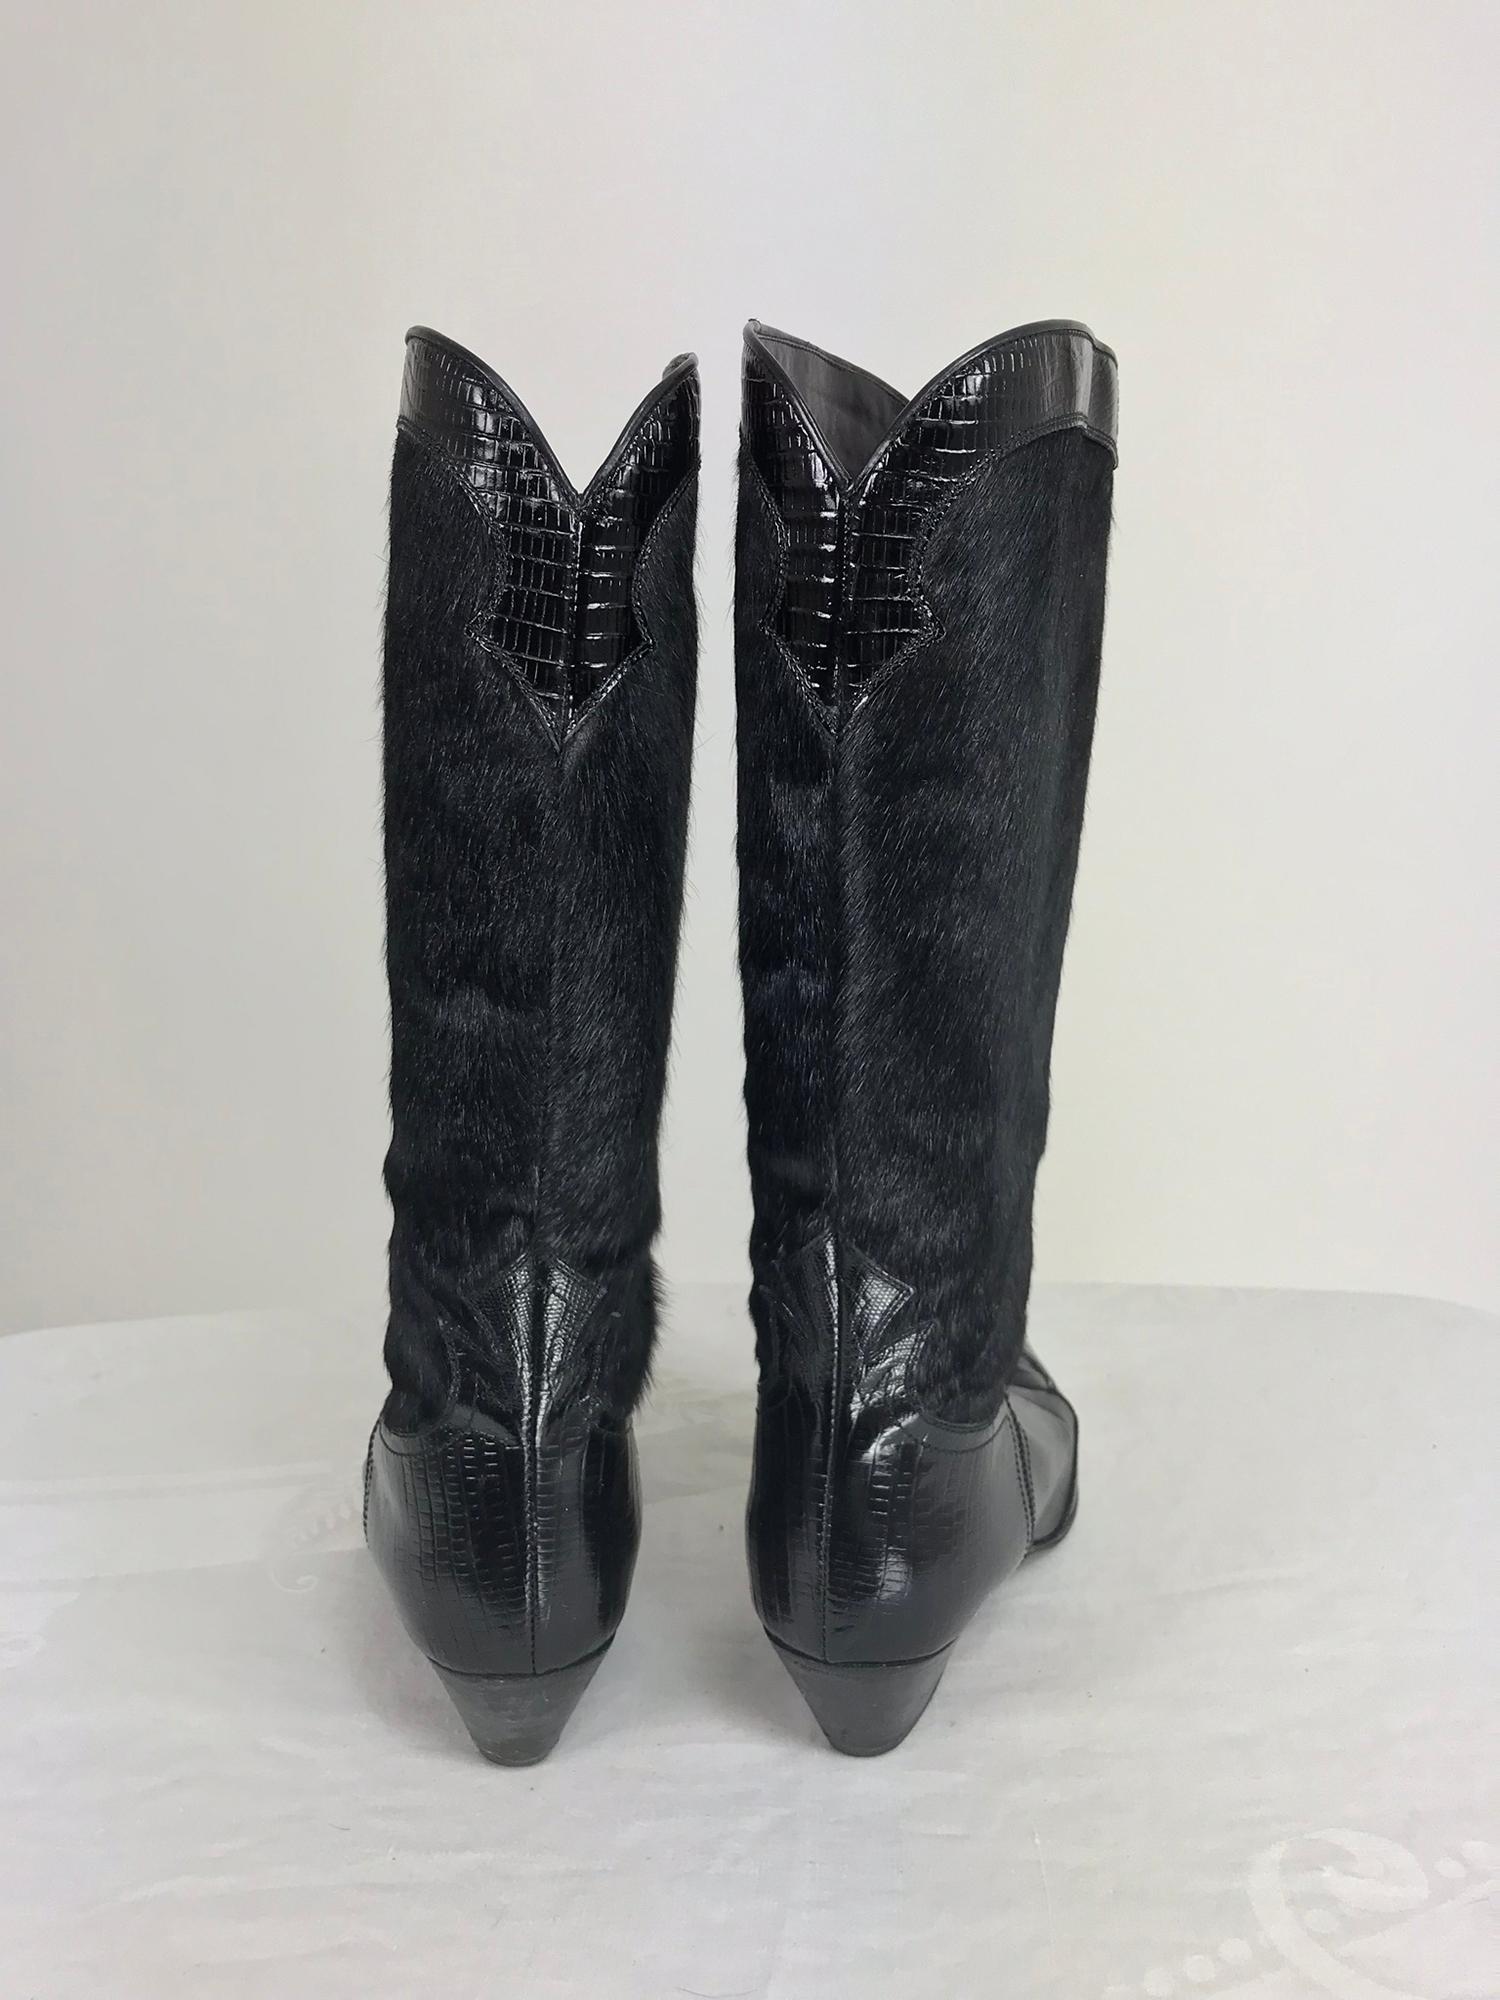 1980s cowboy boots